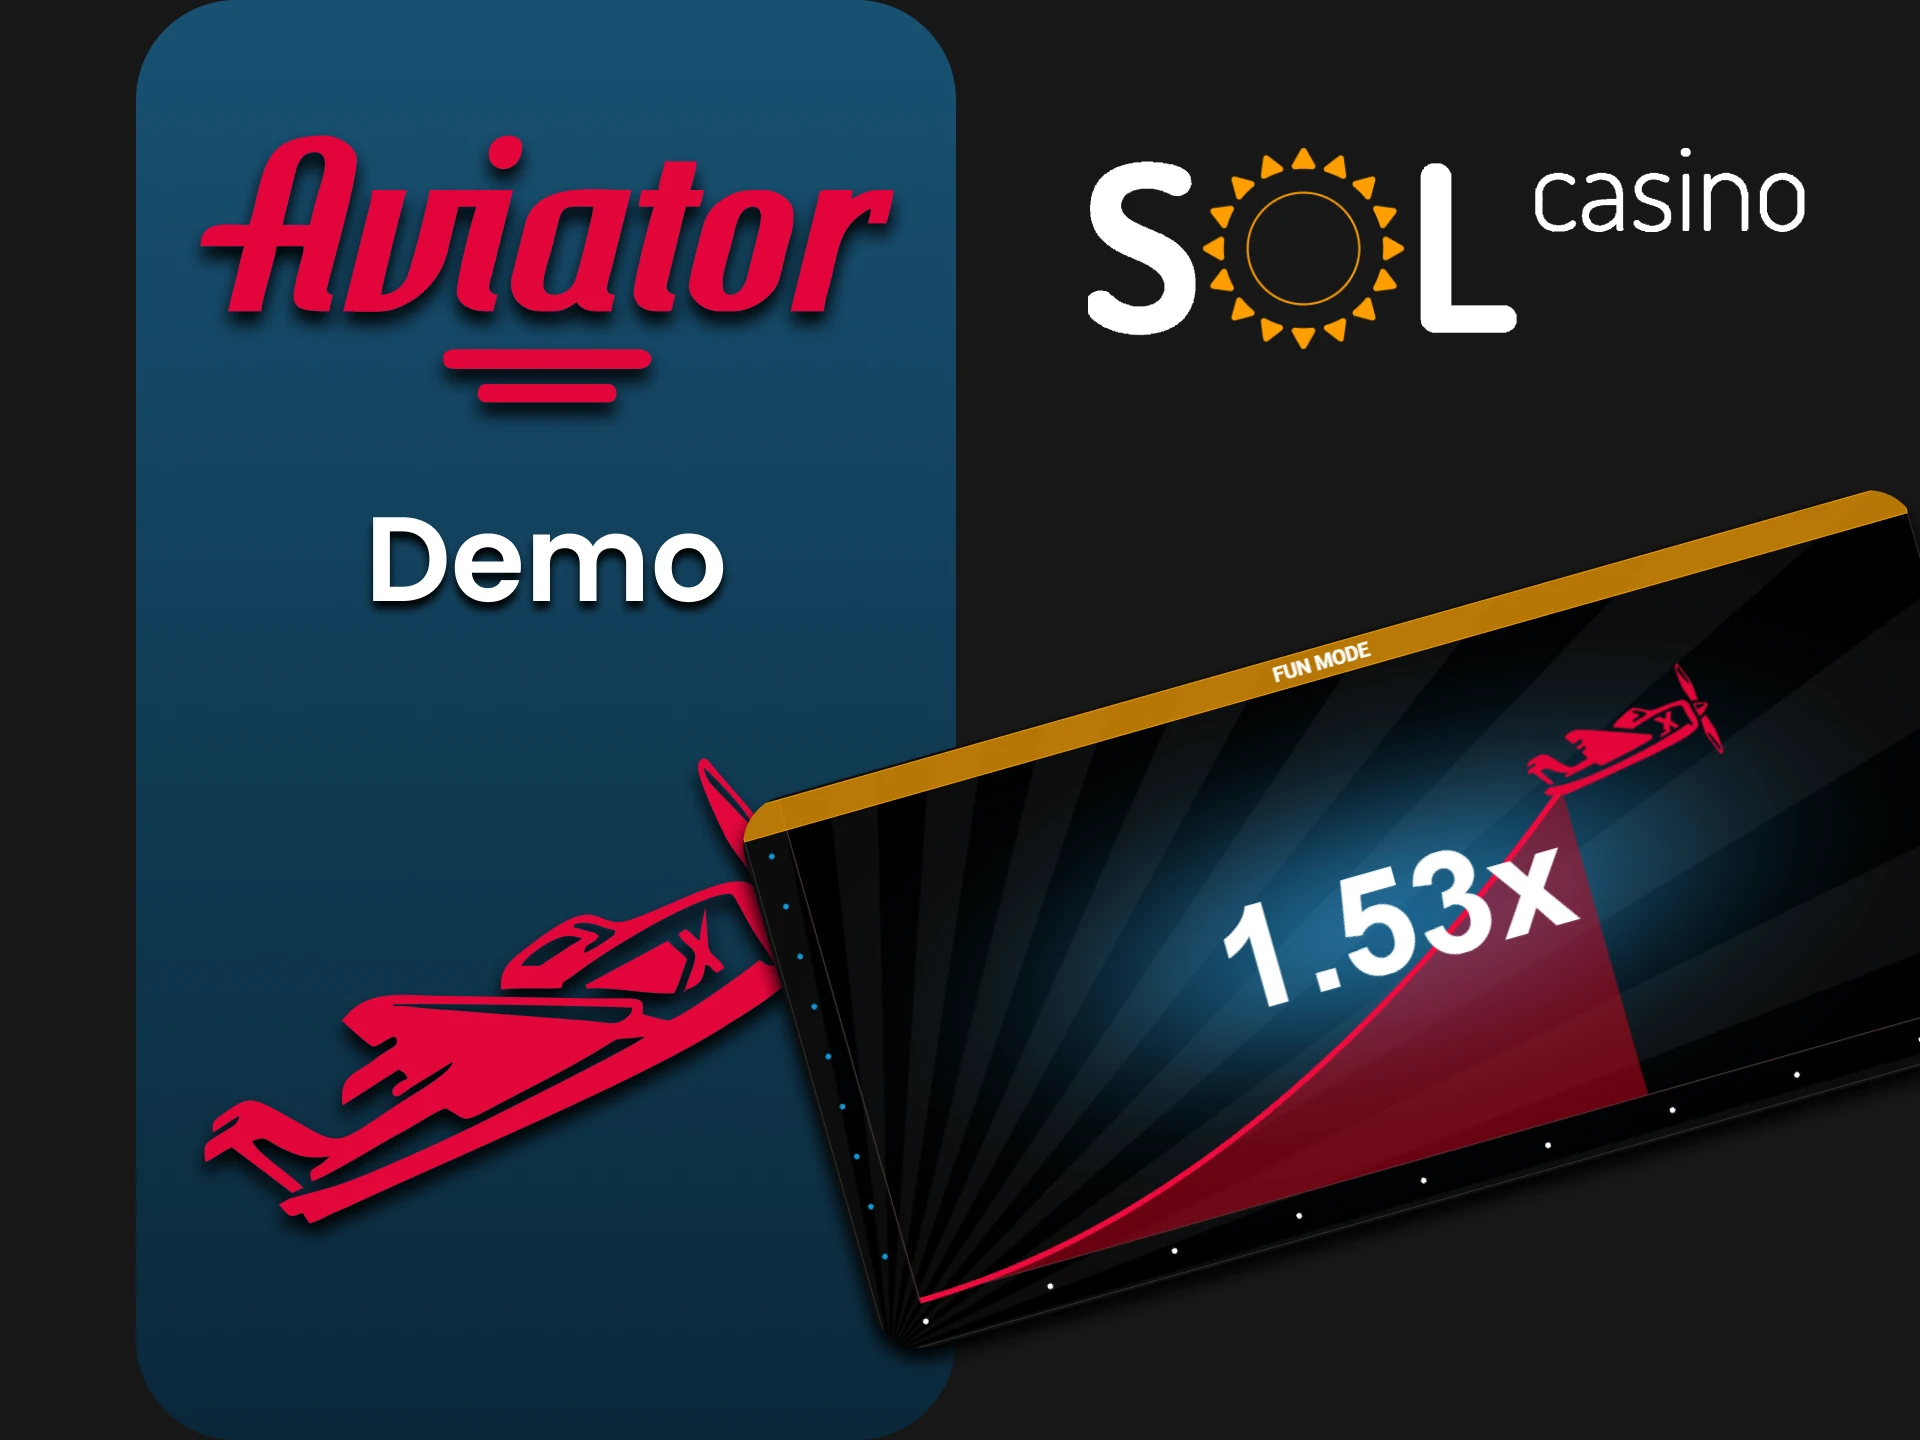 Practice the demo version of Aviator at Sol Casino.